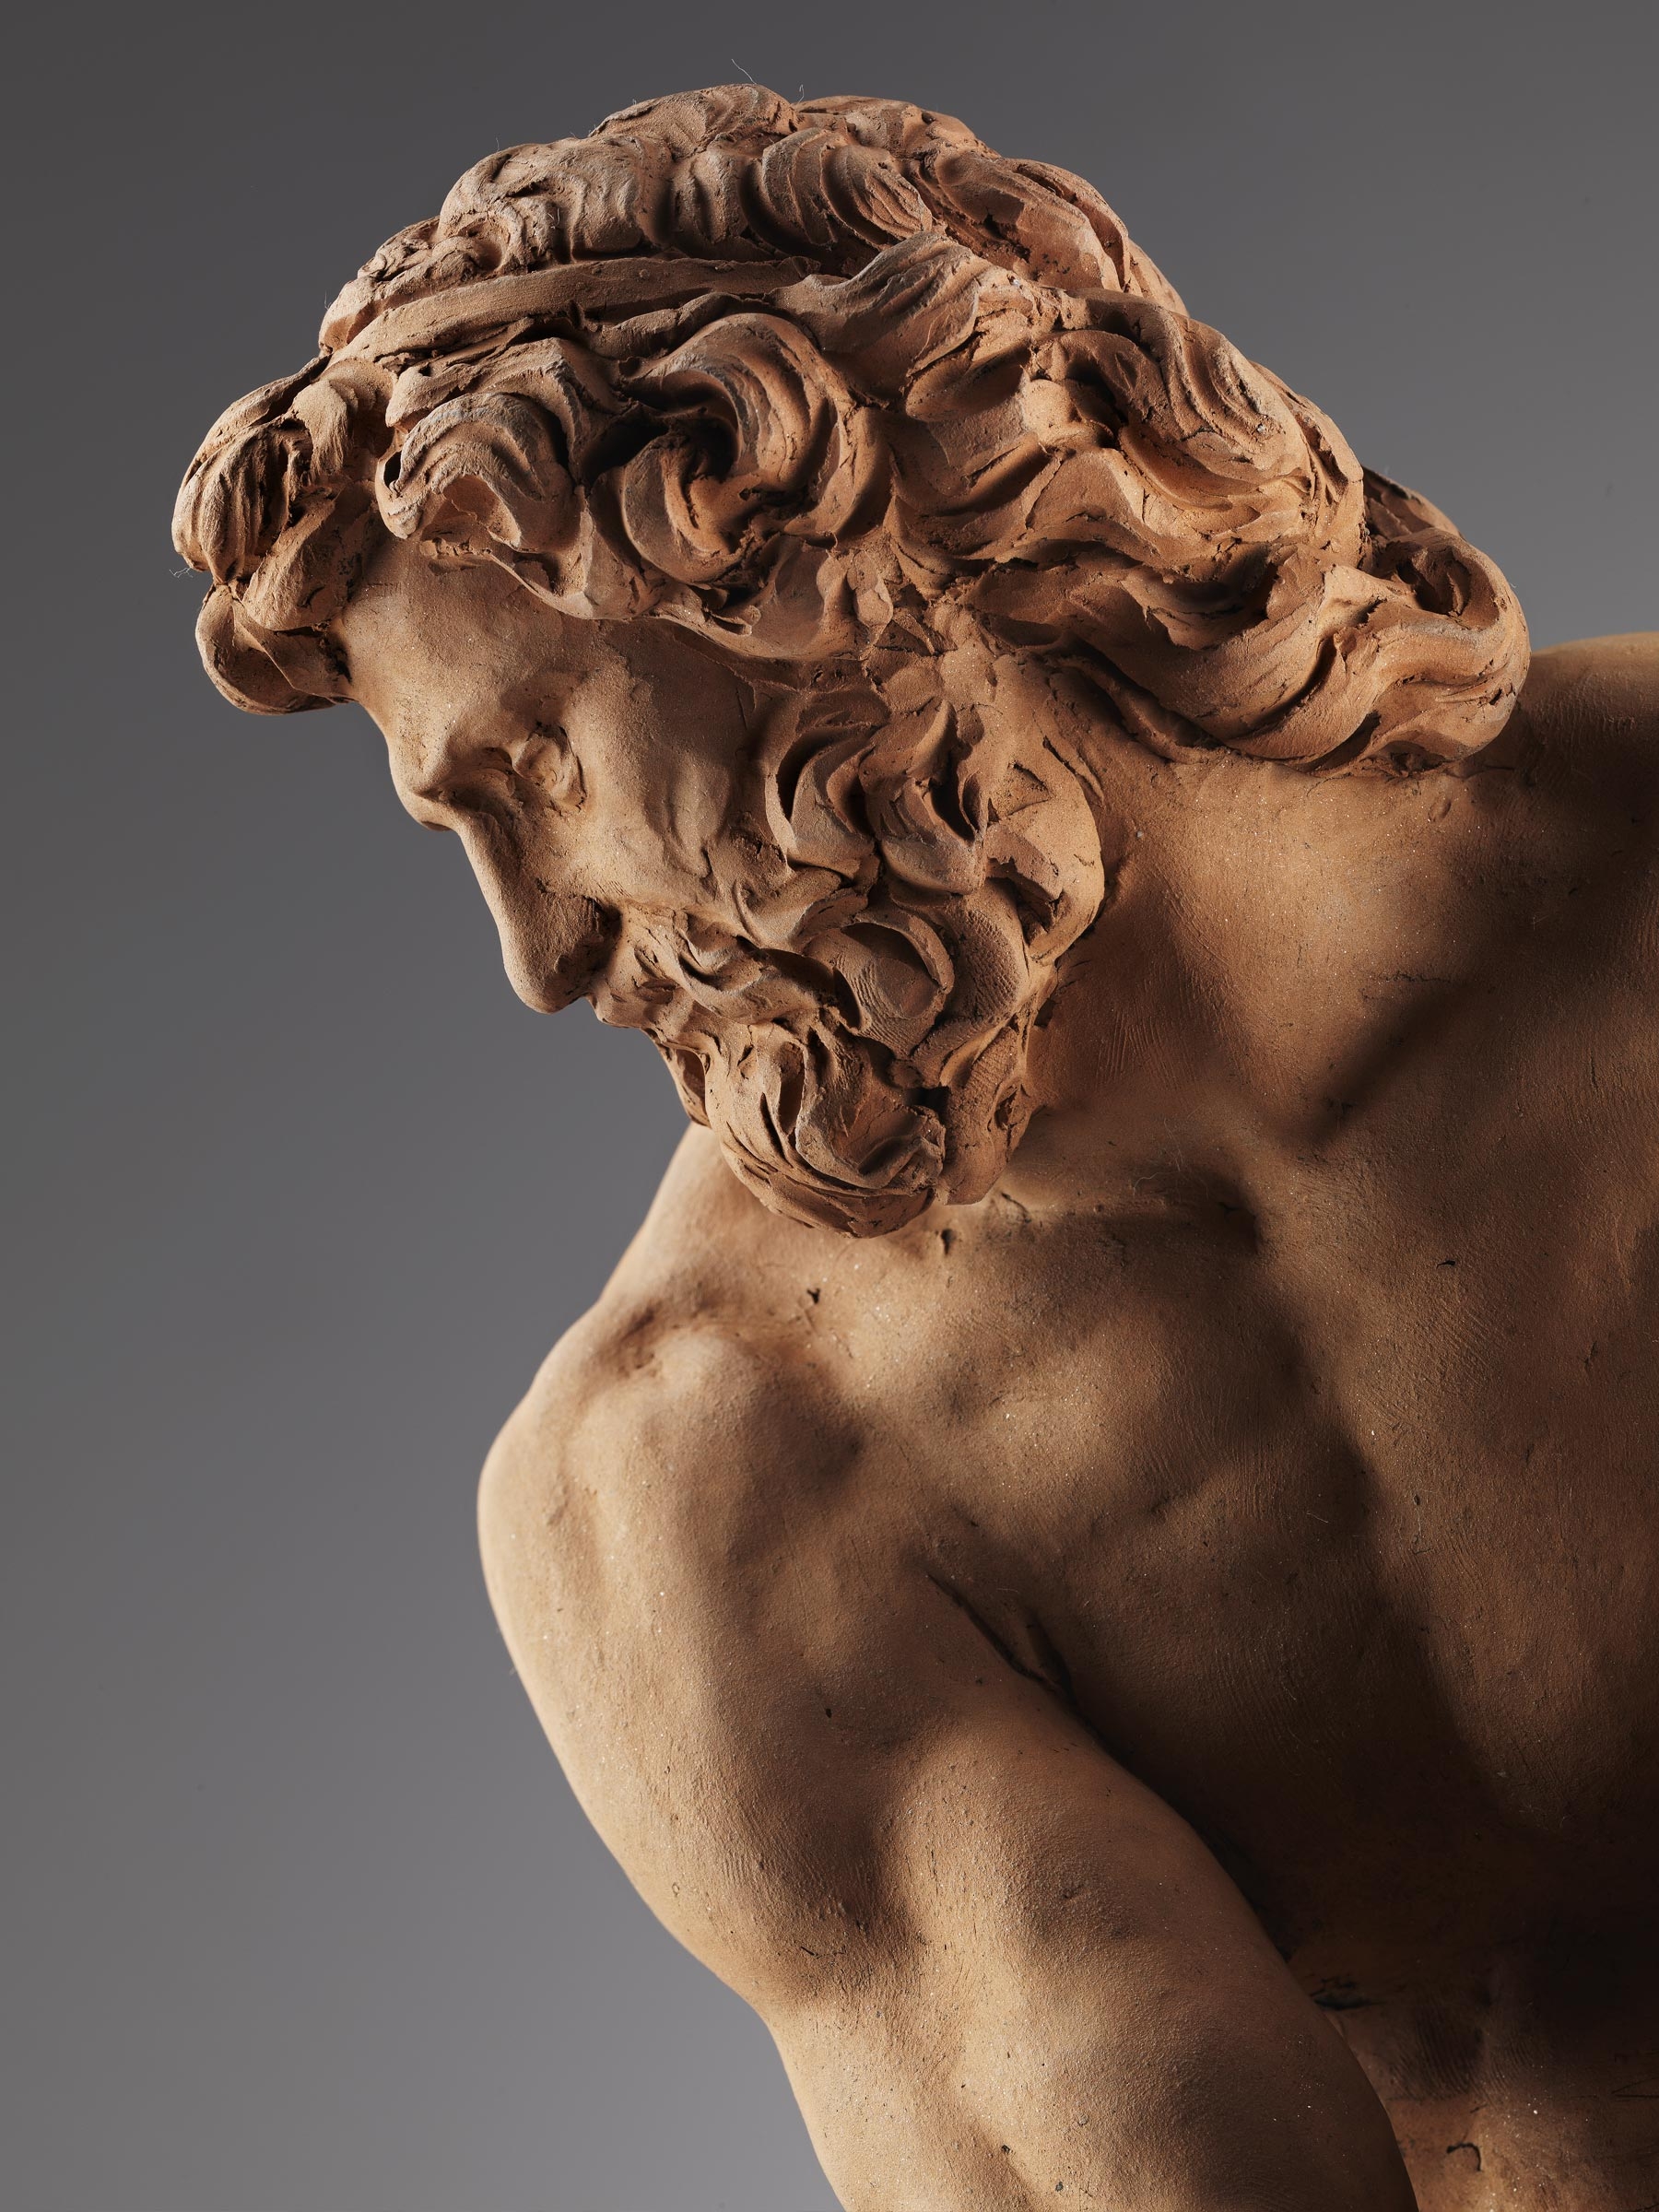 Marco Antonio Prestinari - Hercules and the Nemean Lion